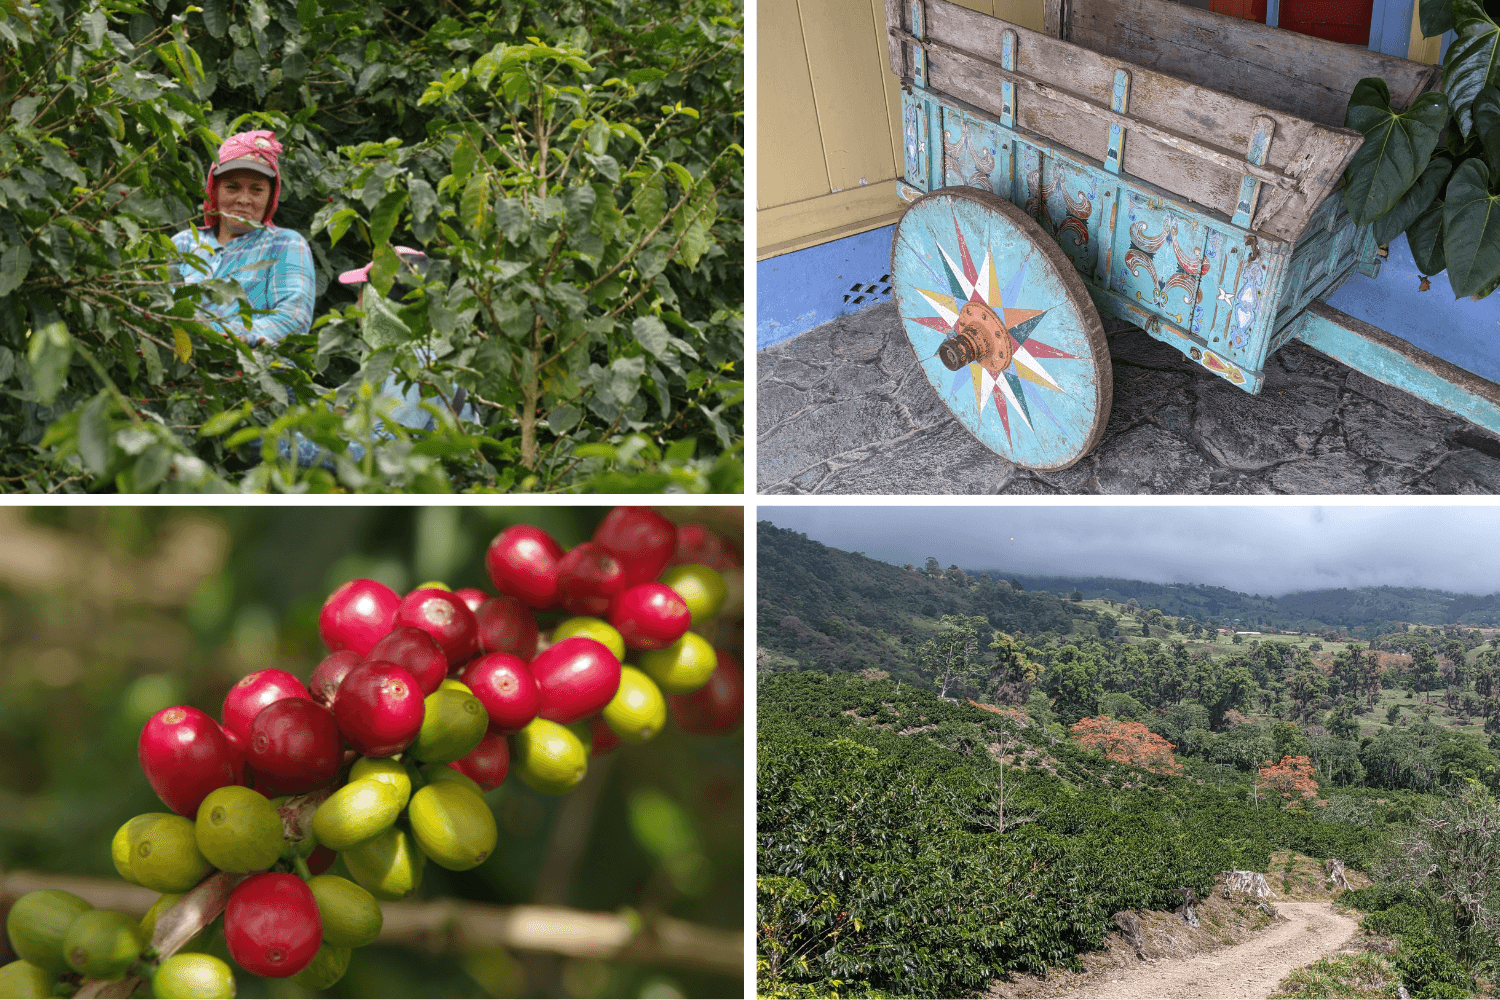 Life on the Aquiares coffee farm